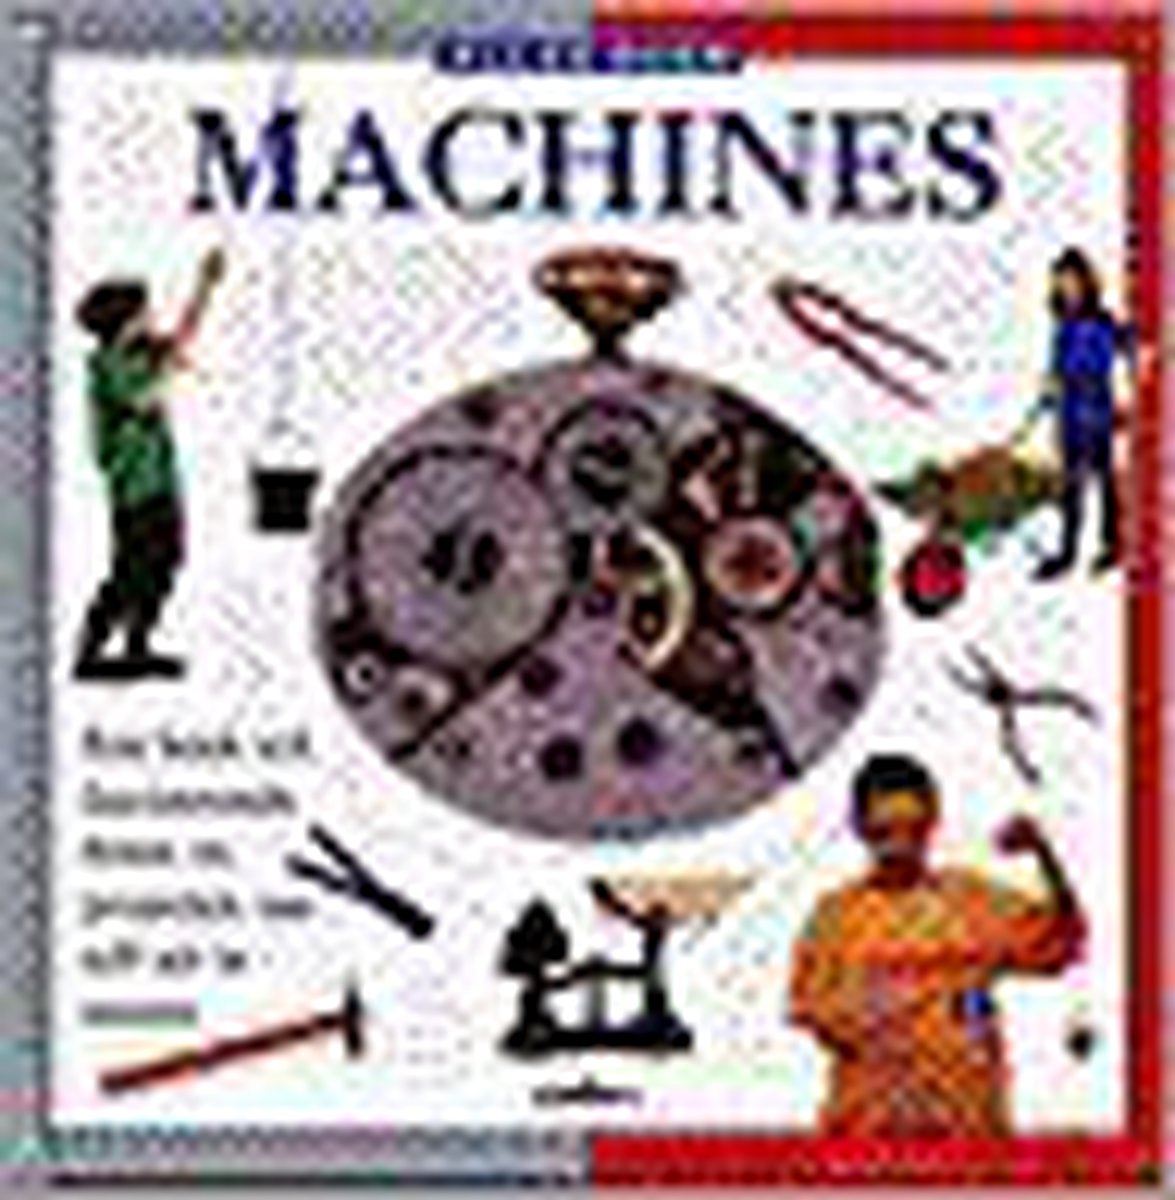 Machines - C. Oxlade